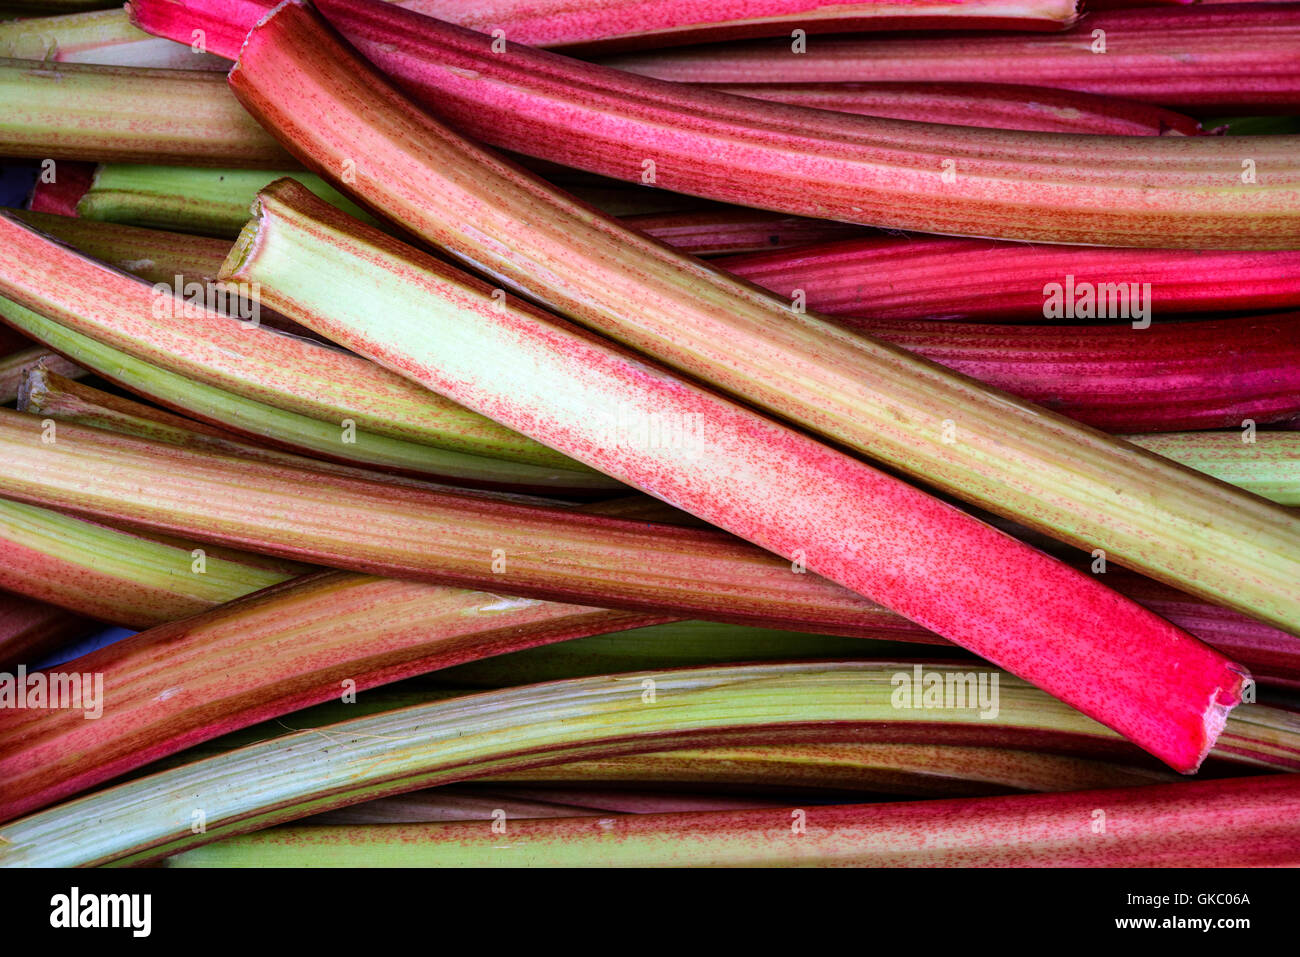 Rhubarb, close-up Stock Photo